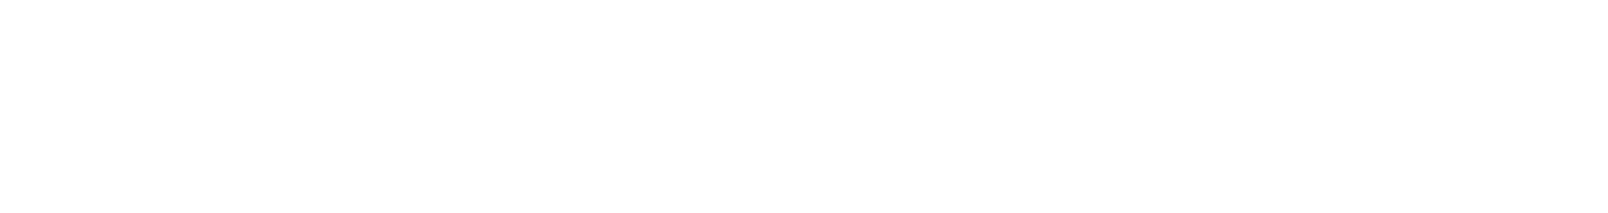 competir-2020.png